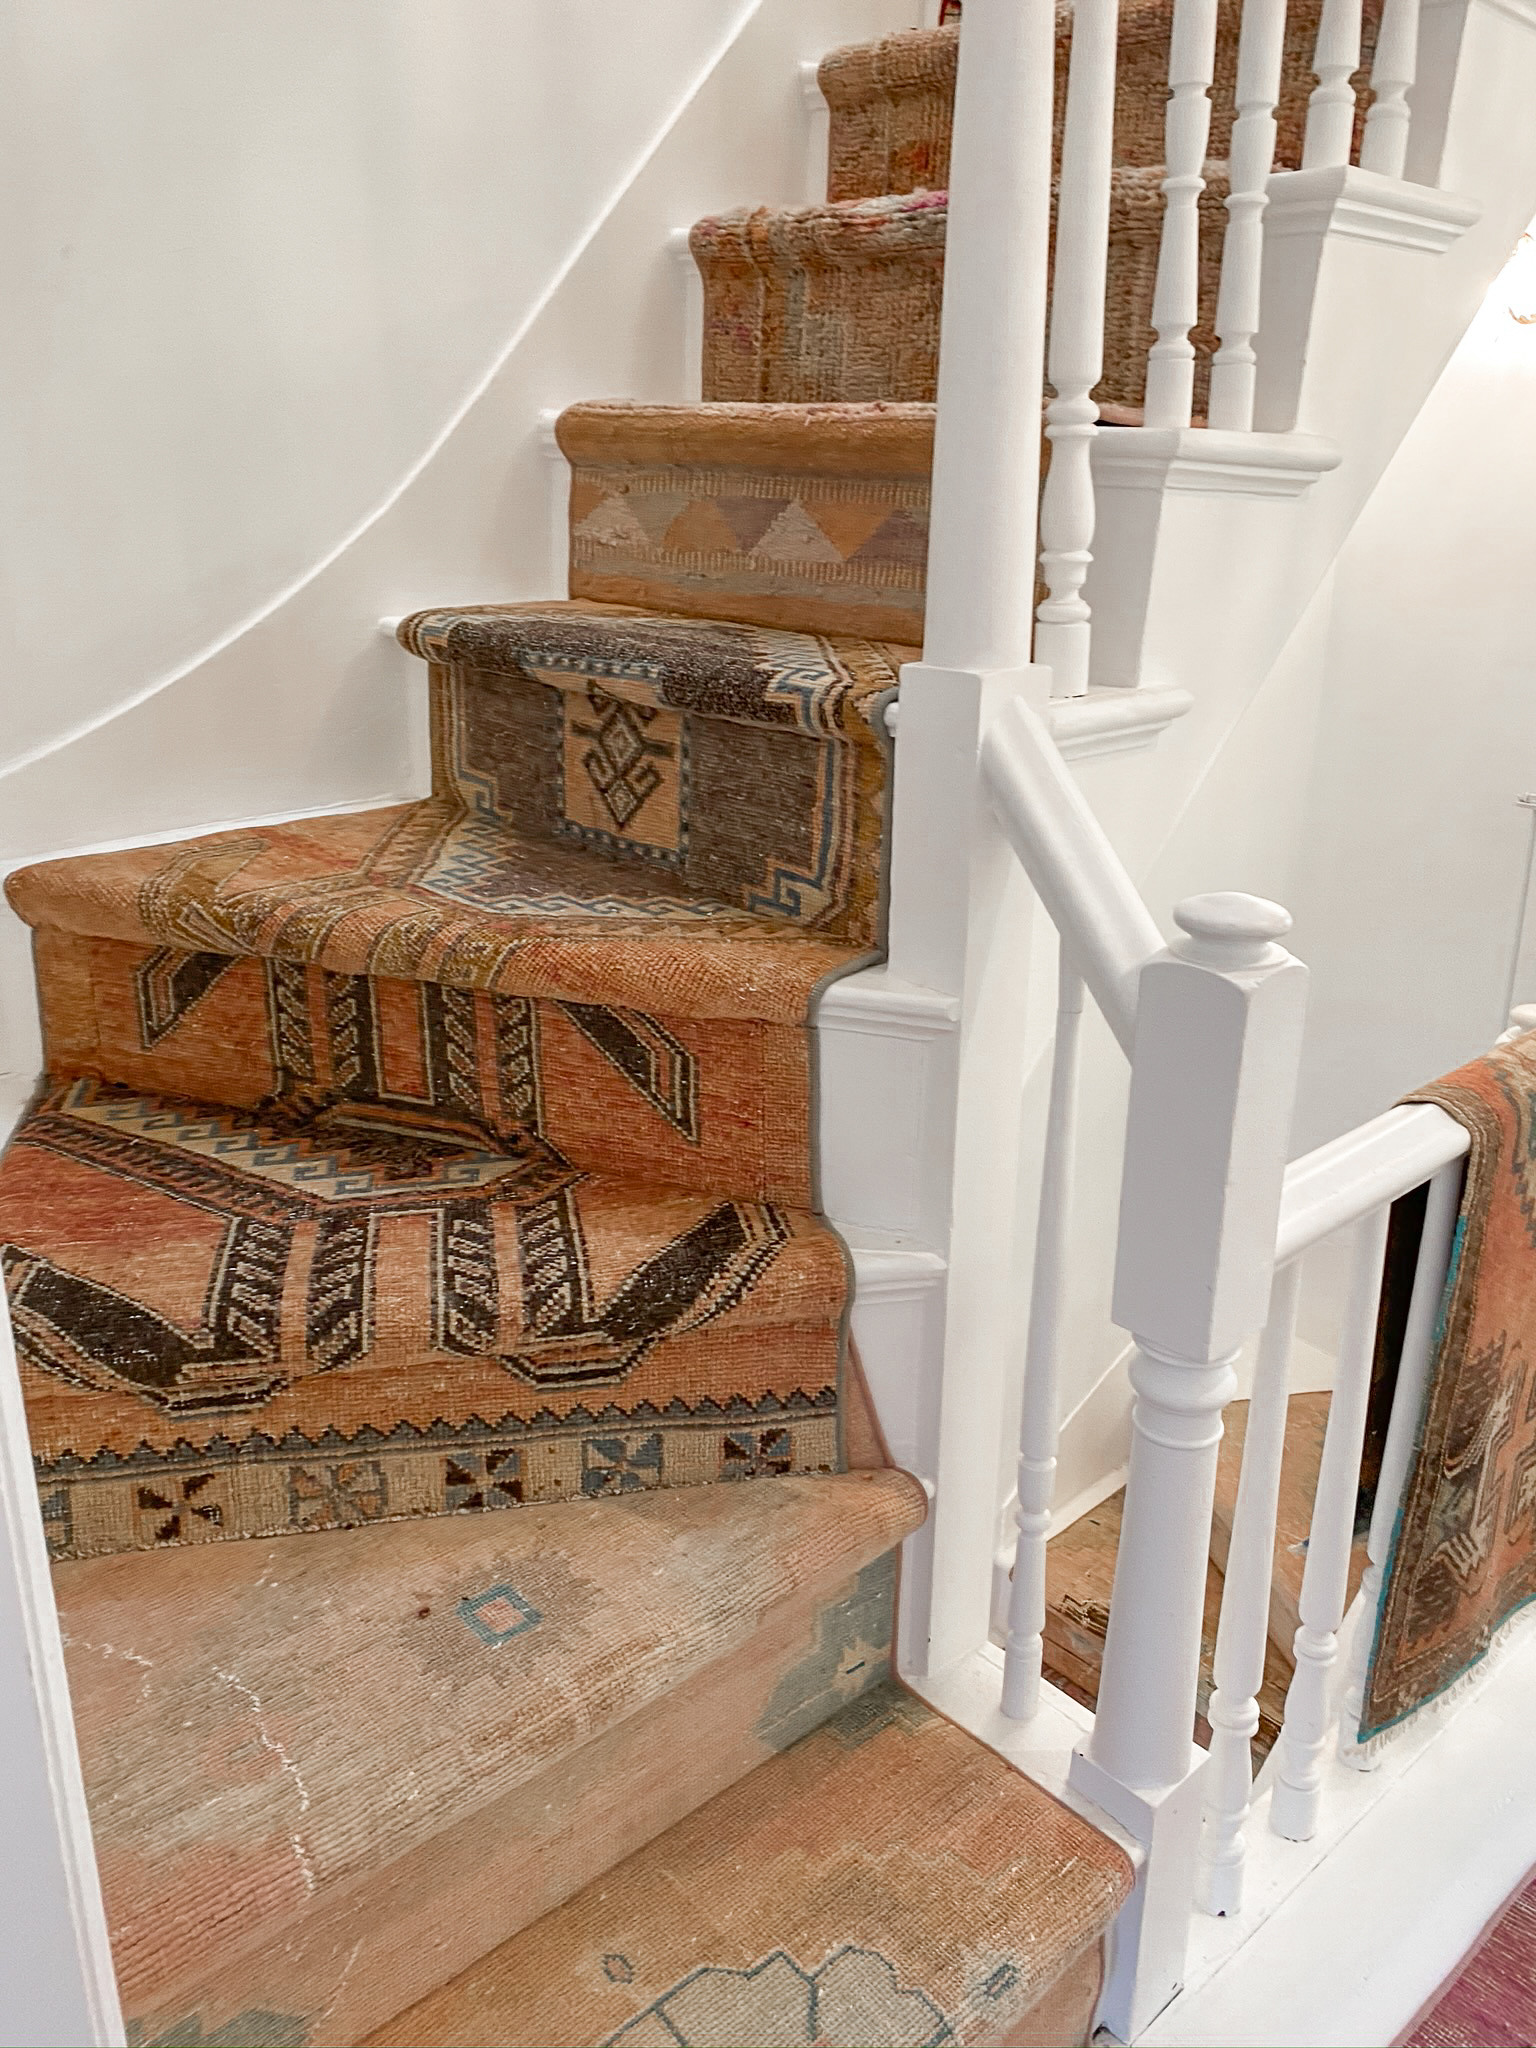 https://st.hzcdn.com/simgs/pictures/staircases/oriental-custom-stair-runner-the-carpet-workroom-img~65a117080e70bdee_14-4840-1-2330a5b.jpg